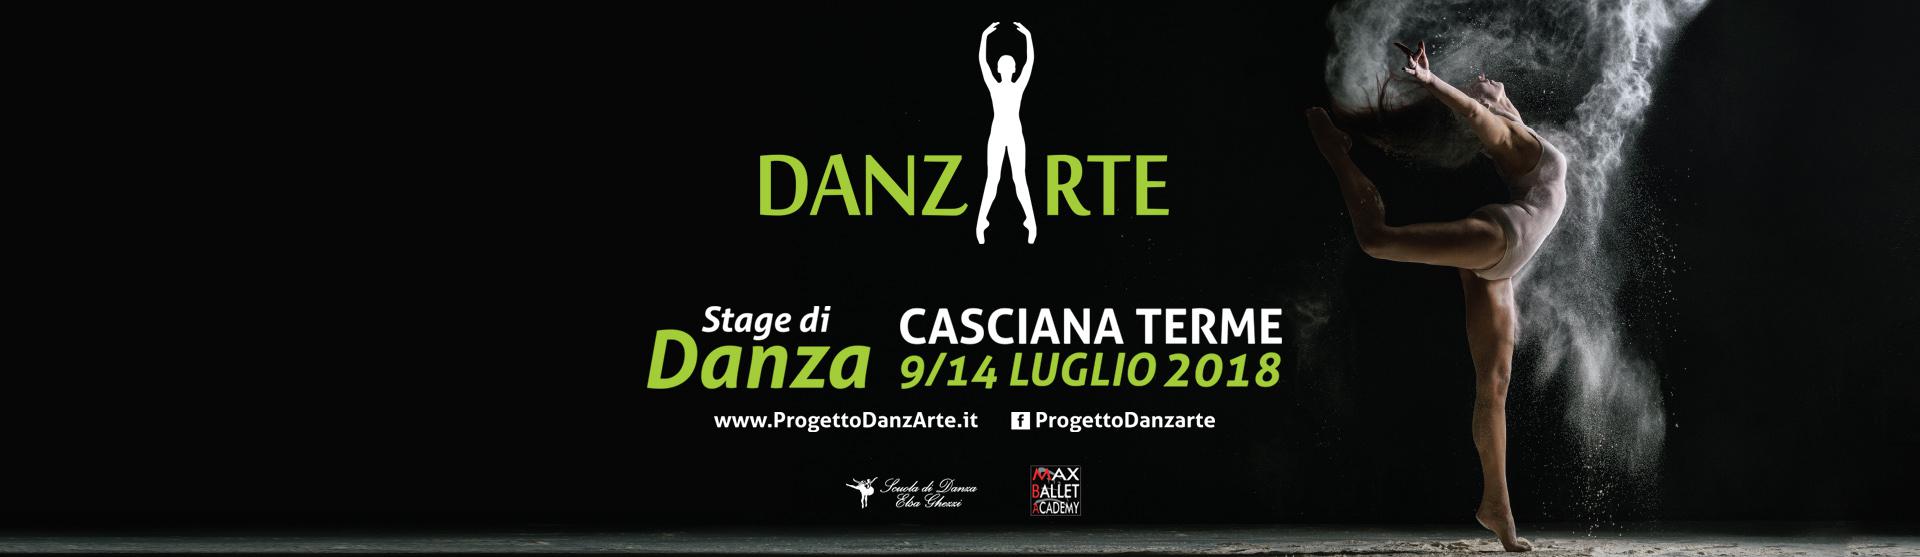 DanzArte Casciana Terme 2018